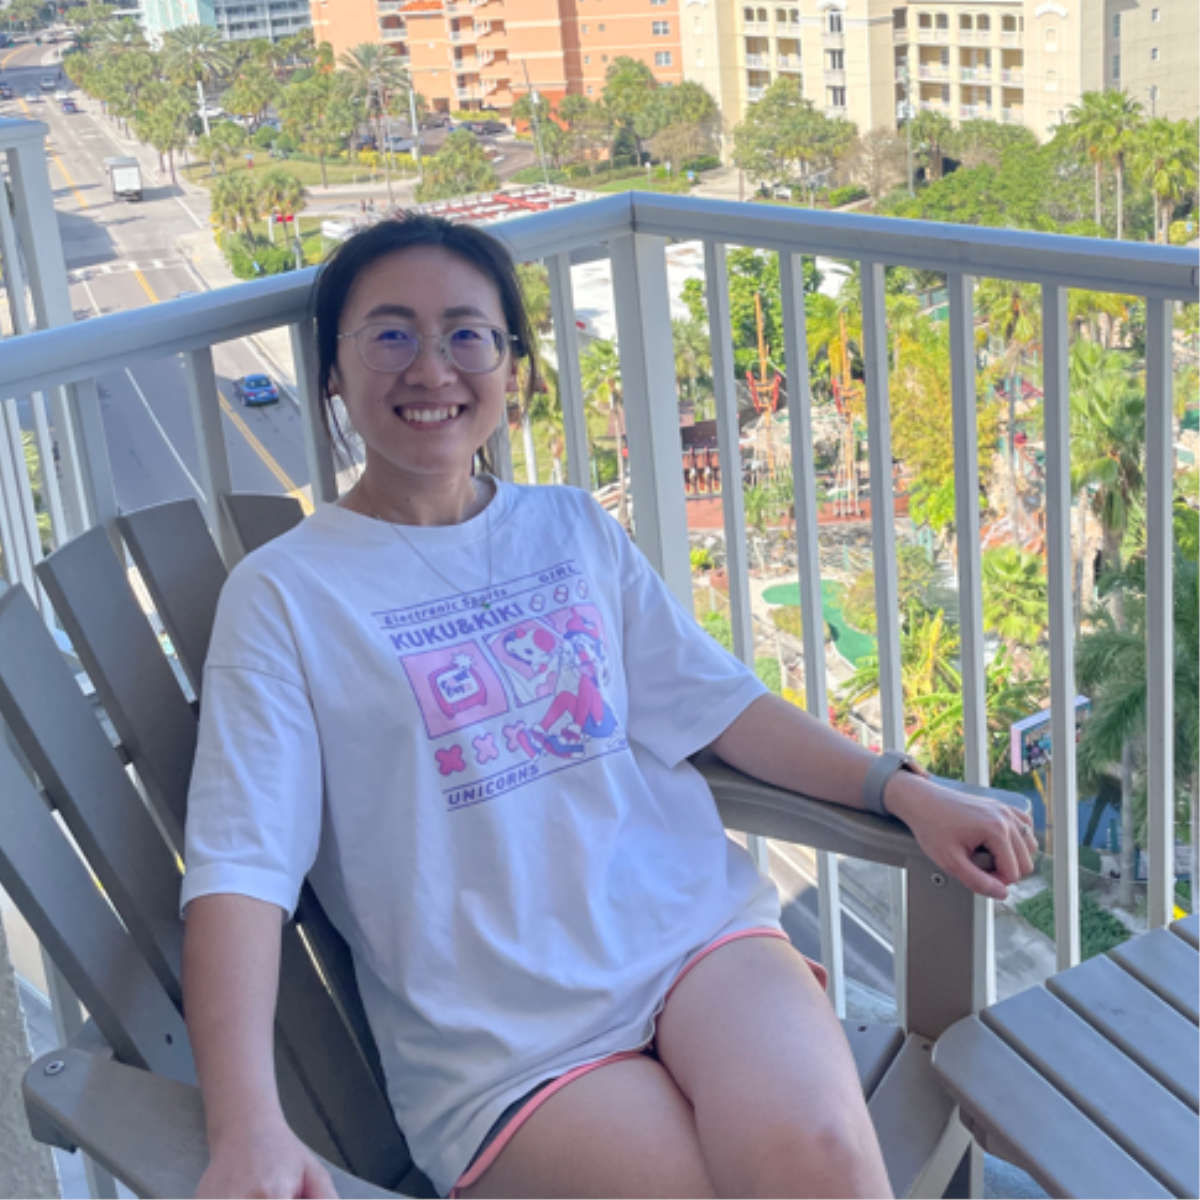 Xia Liu sitting on a balcony